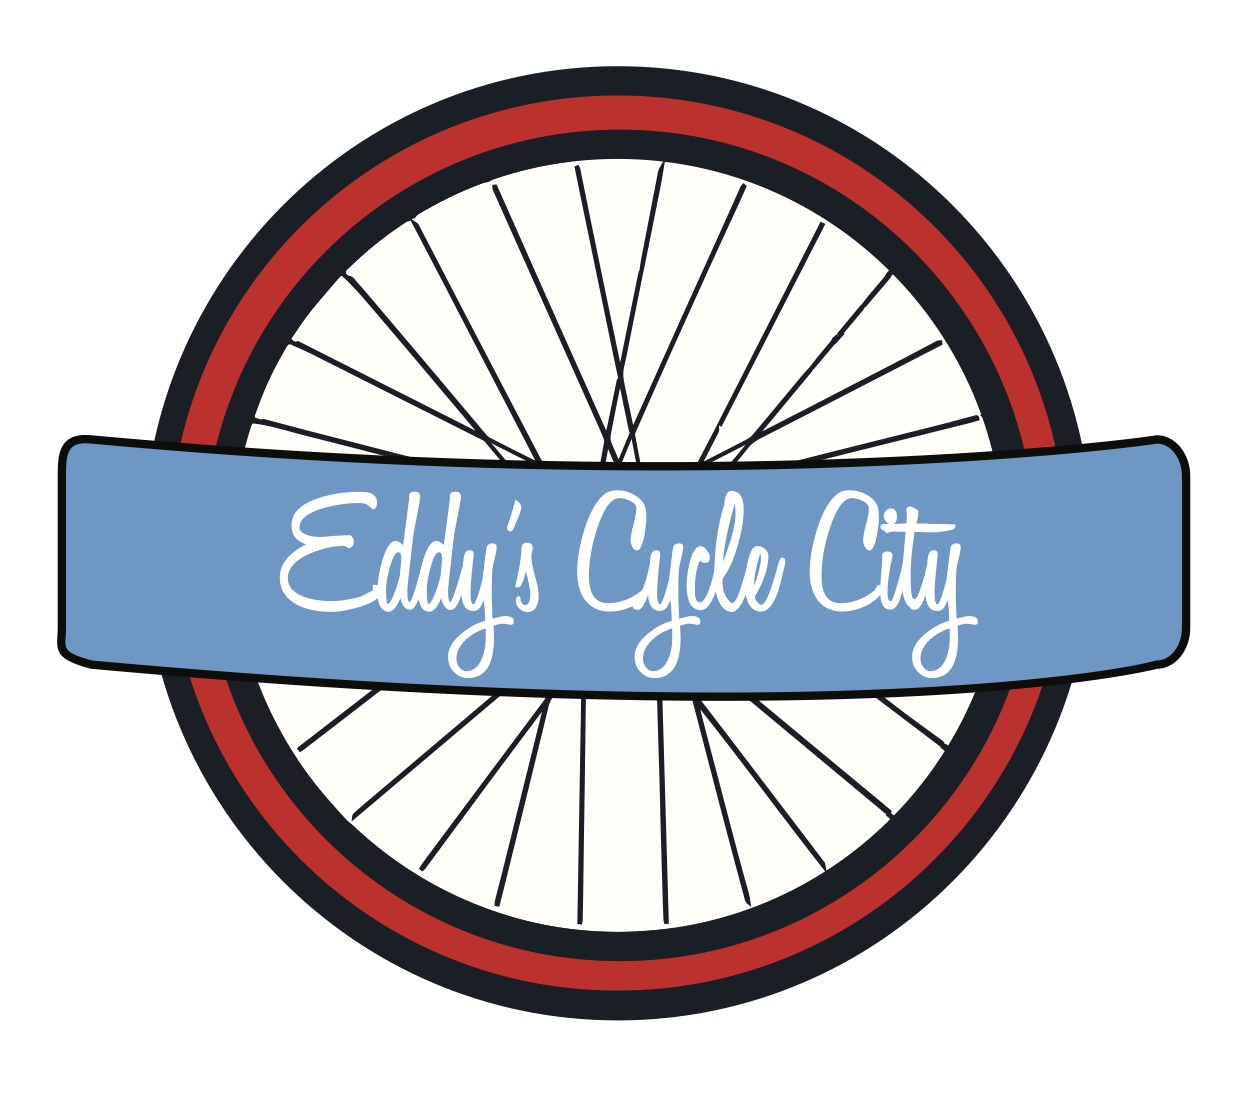 Eddy's Cycle City